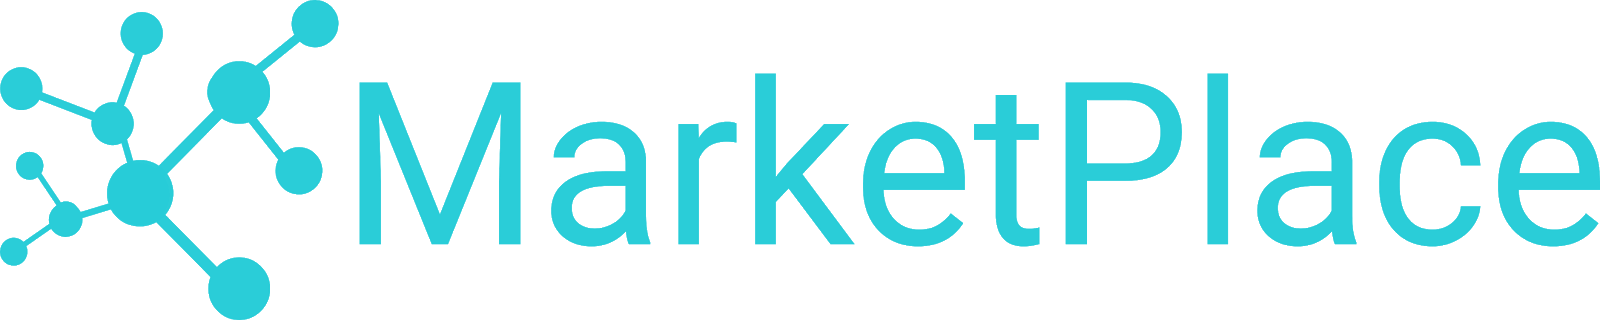 _images/marketplace-logo.png